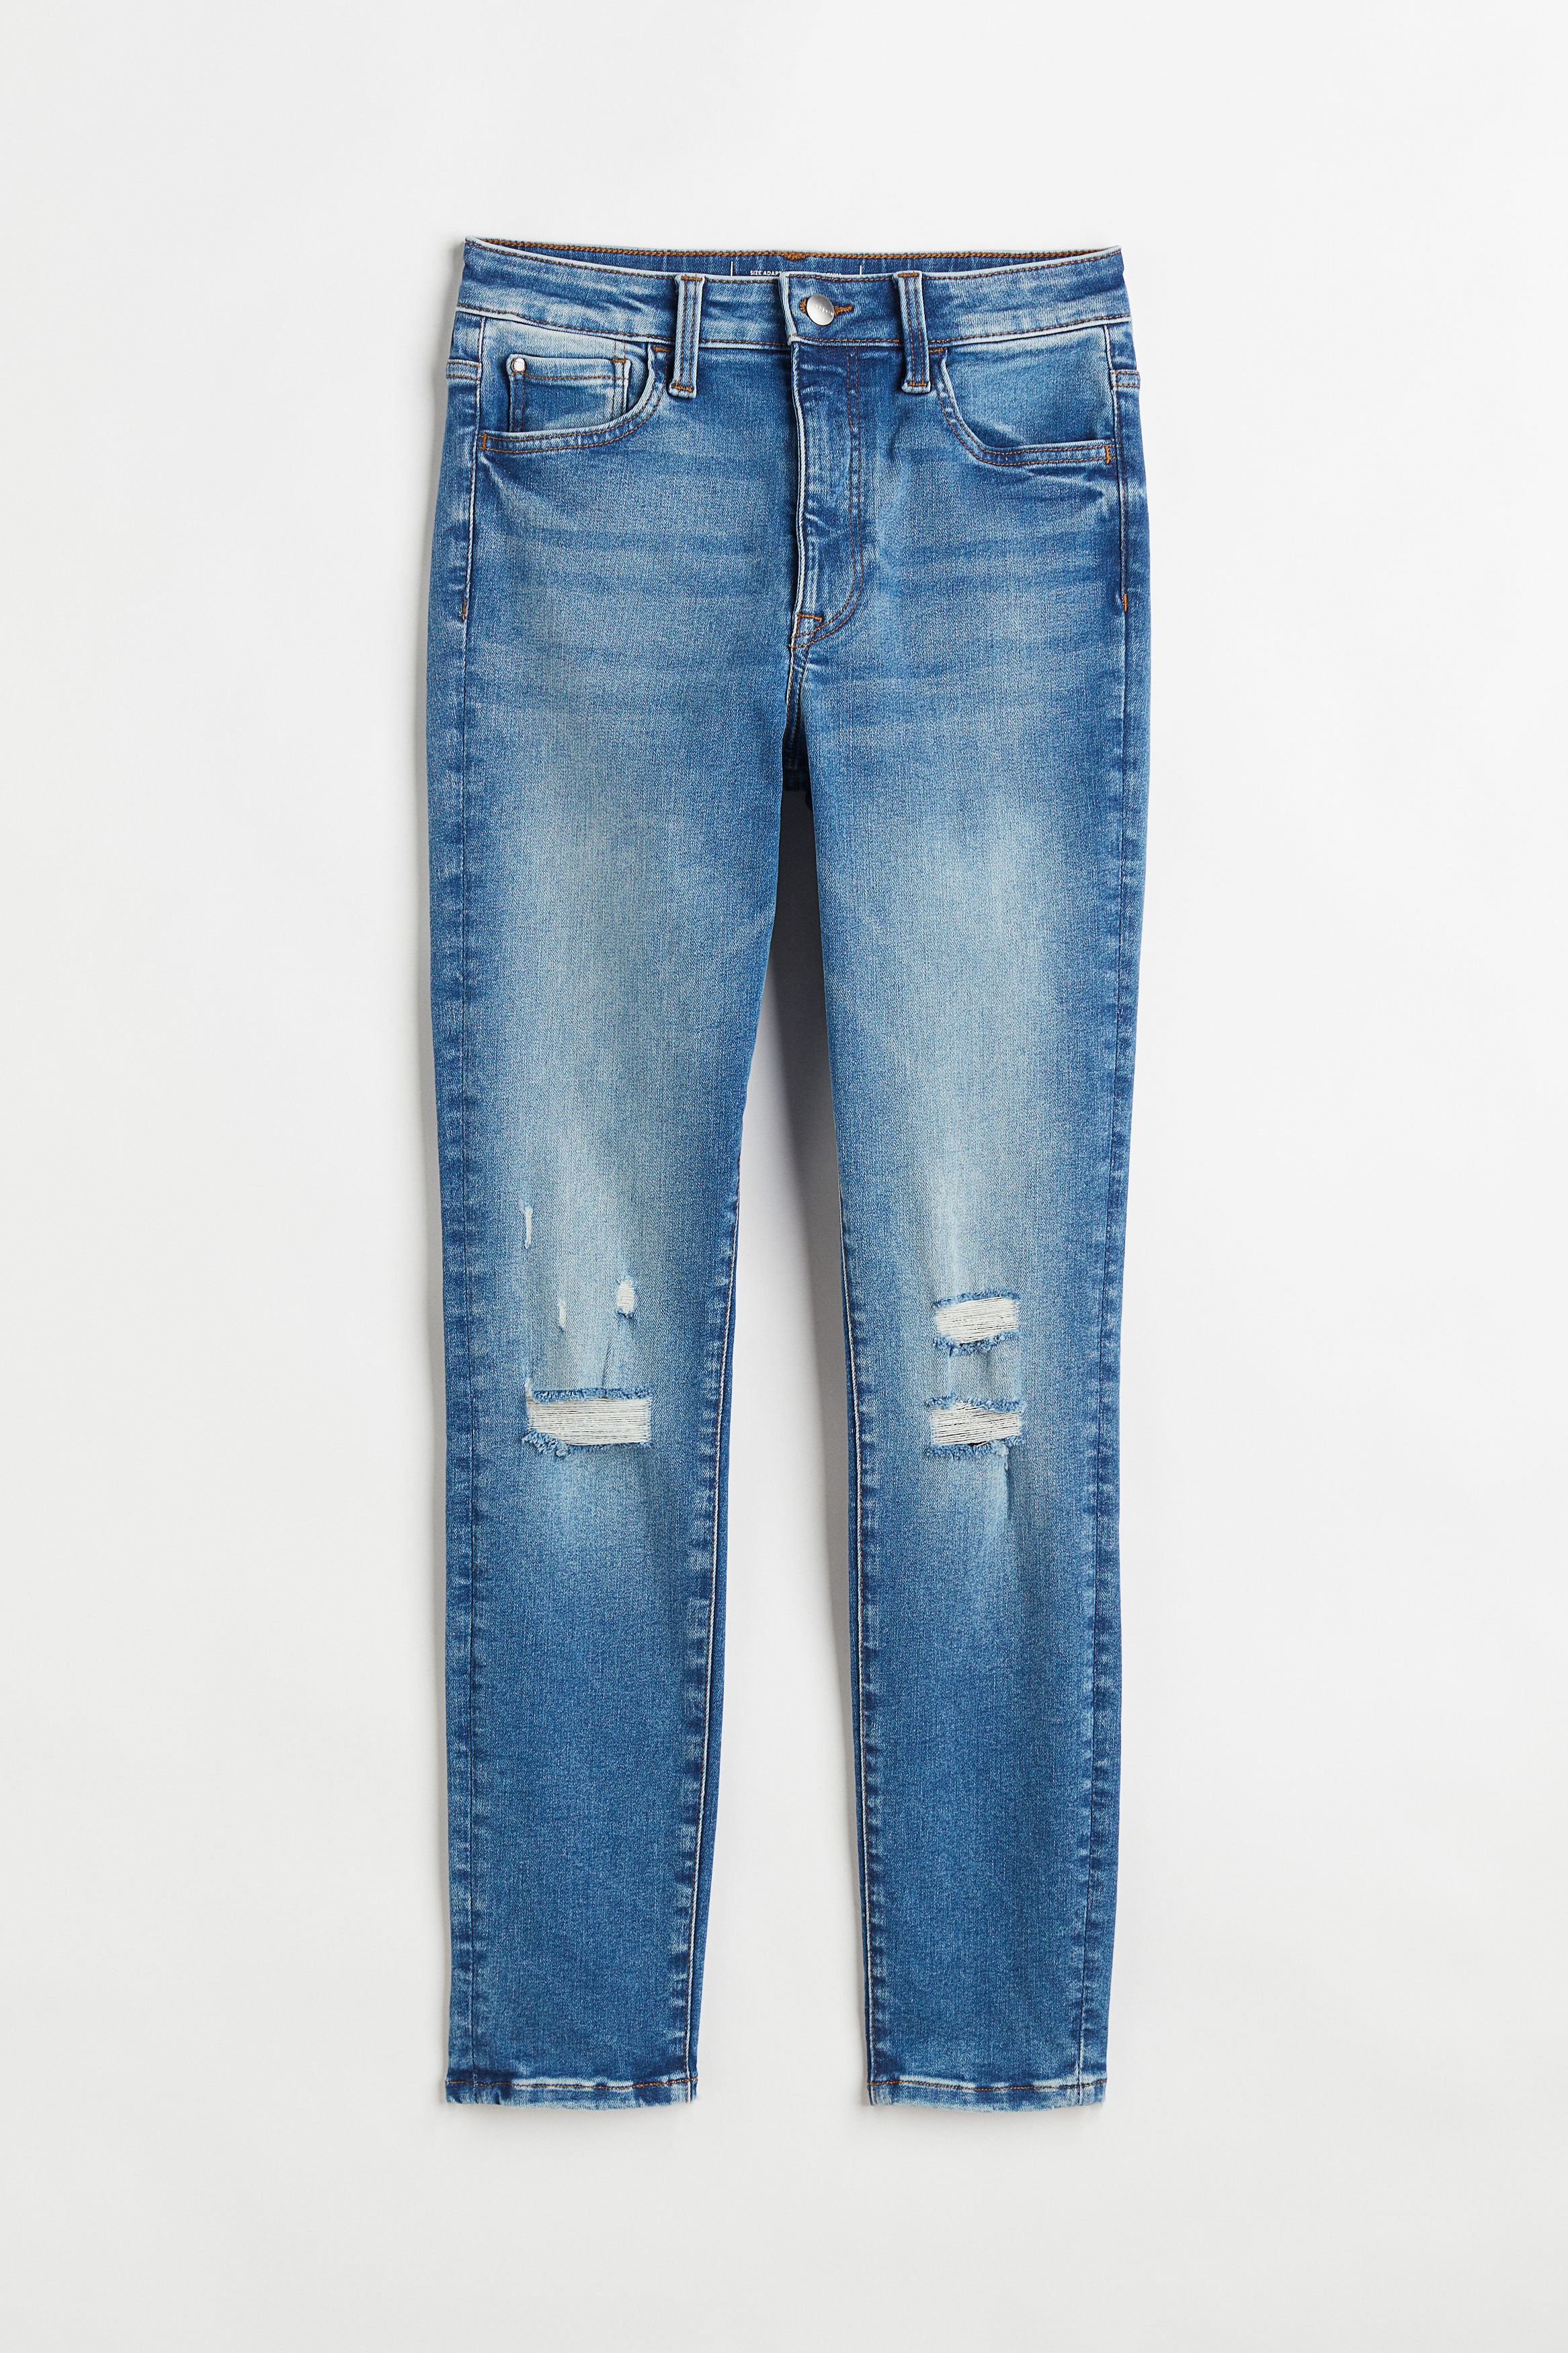 H&M True To You Skinny High Jeans Denimblå, jeans. Farve: Denim blue I størrelse XXXL